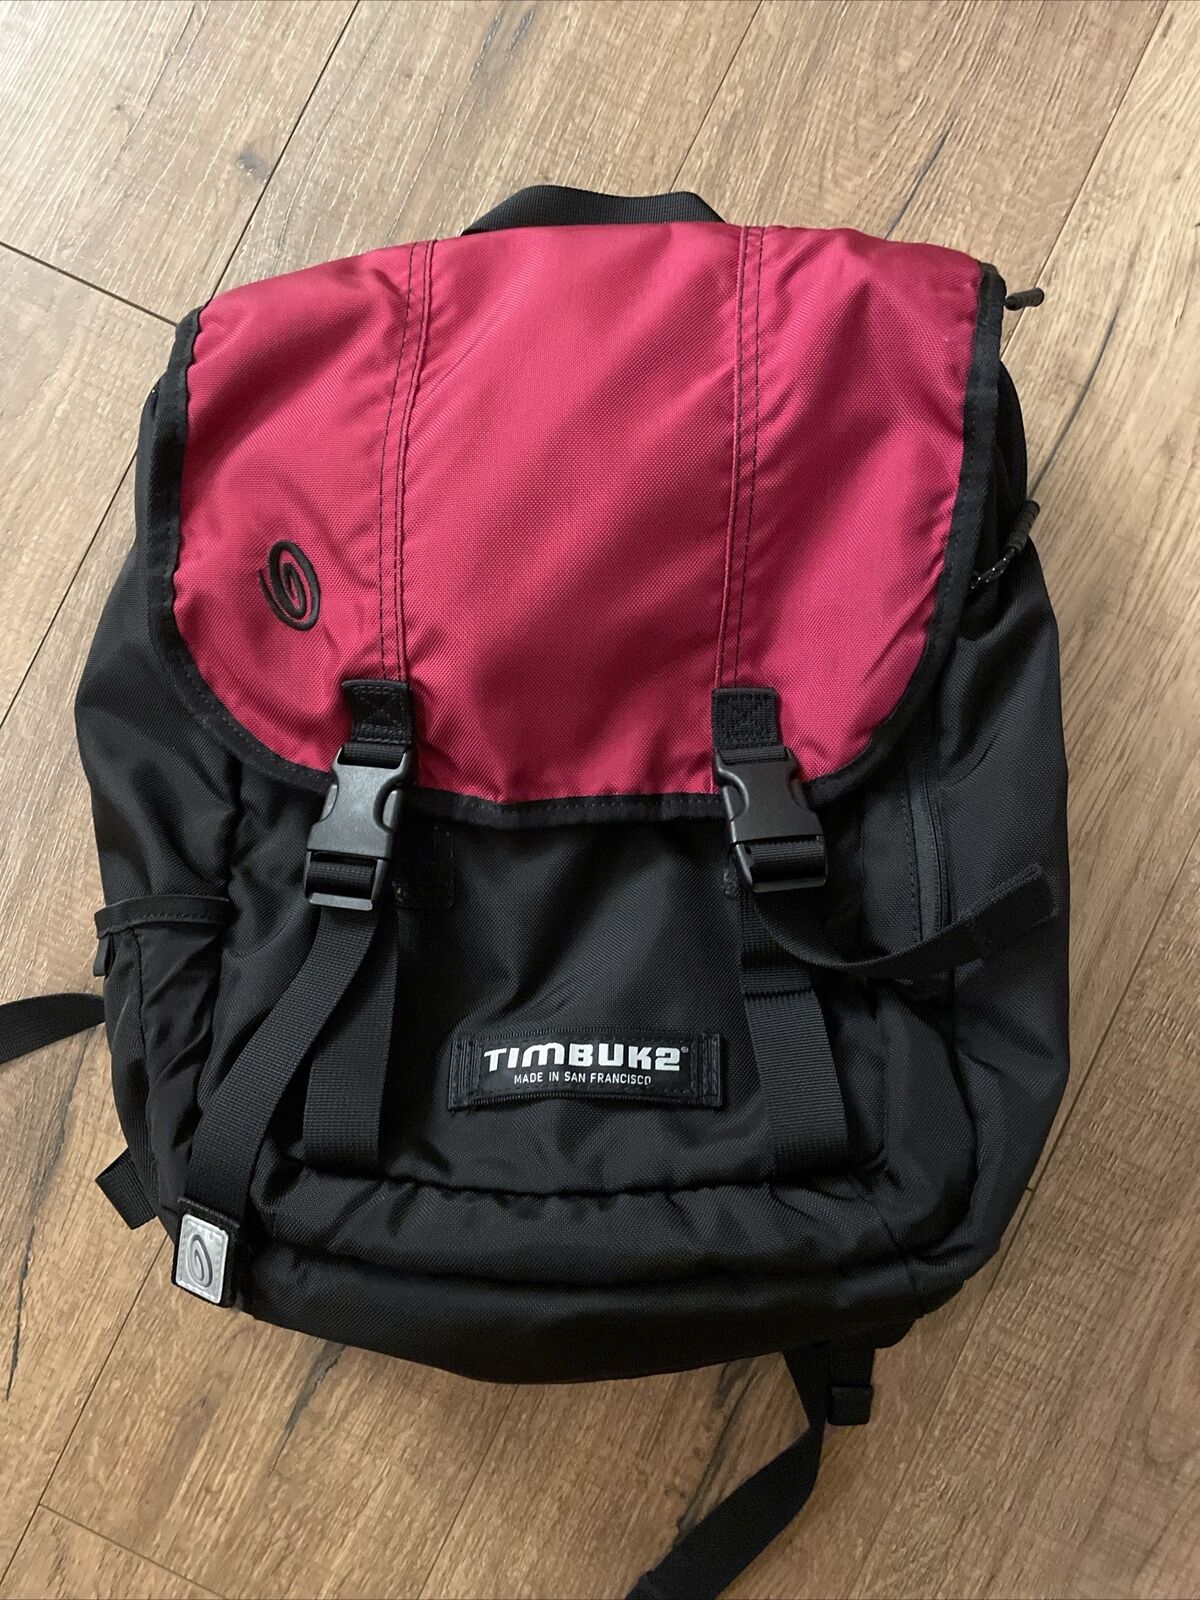 Timbuk2 San Francisco Especial Black/Red Backpack Laptop NICE